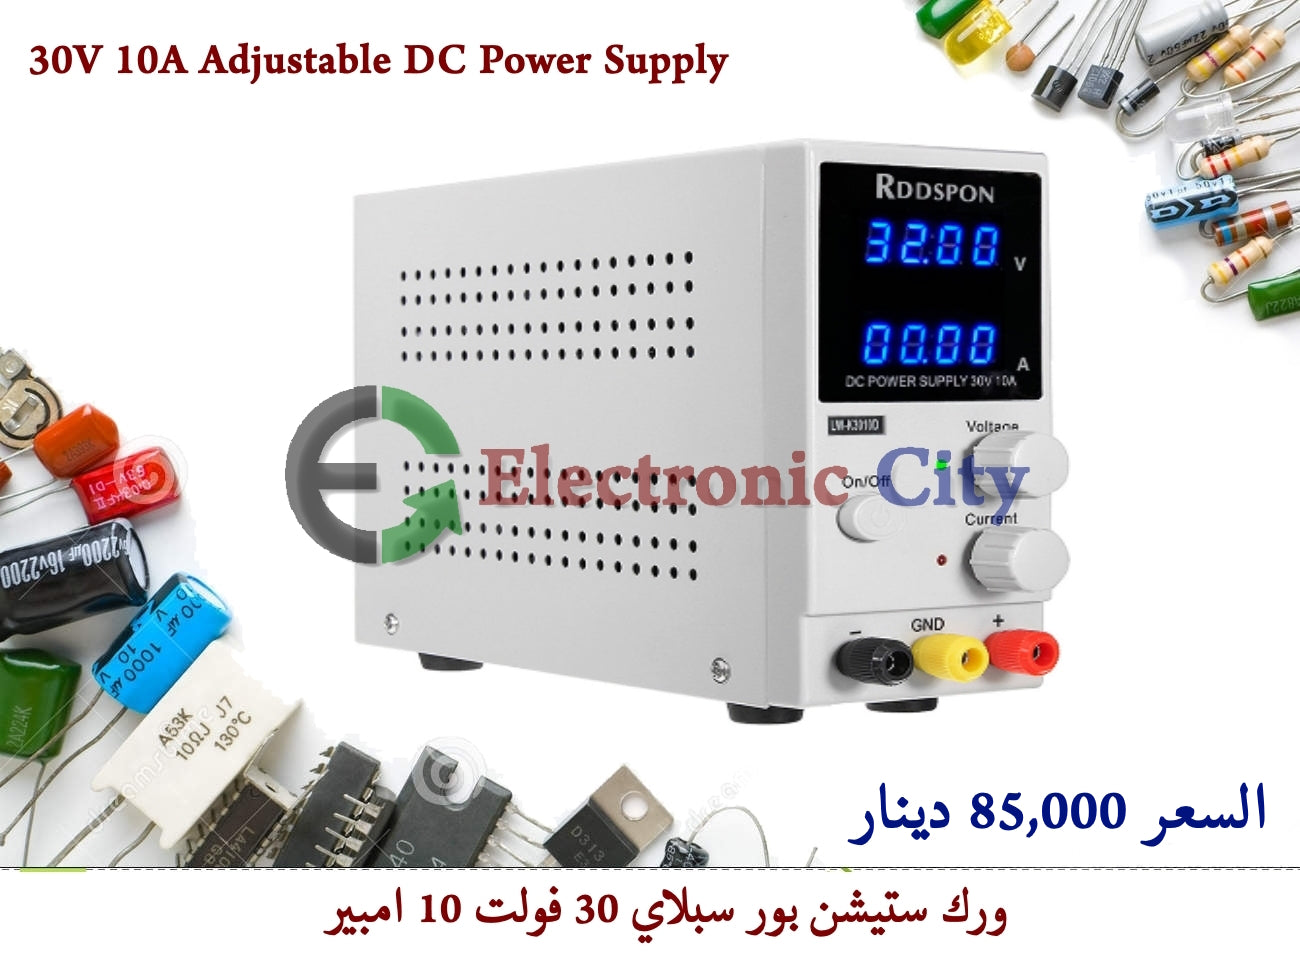 30V 10A Adjustable DC Power Supply